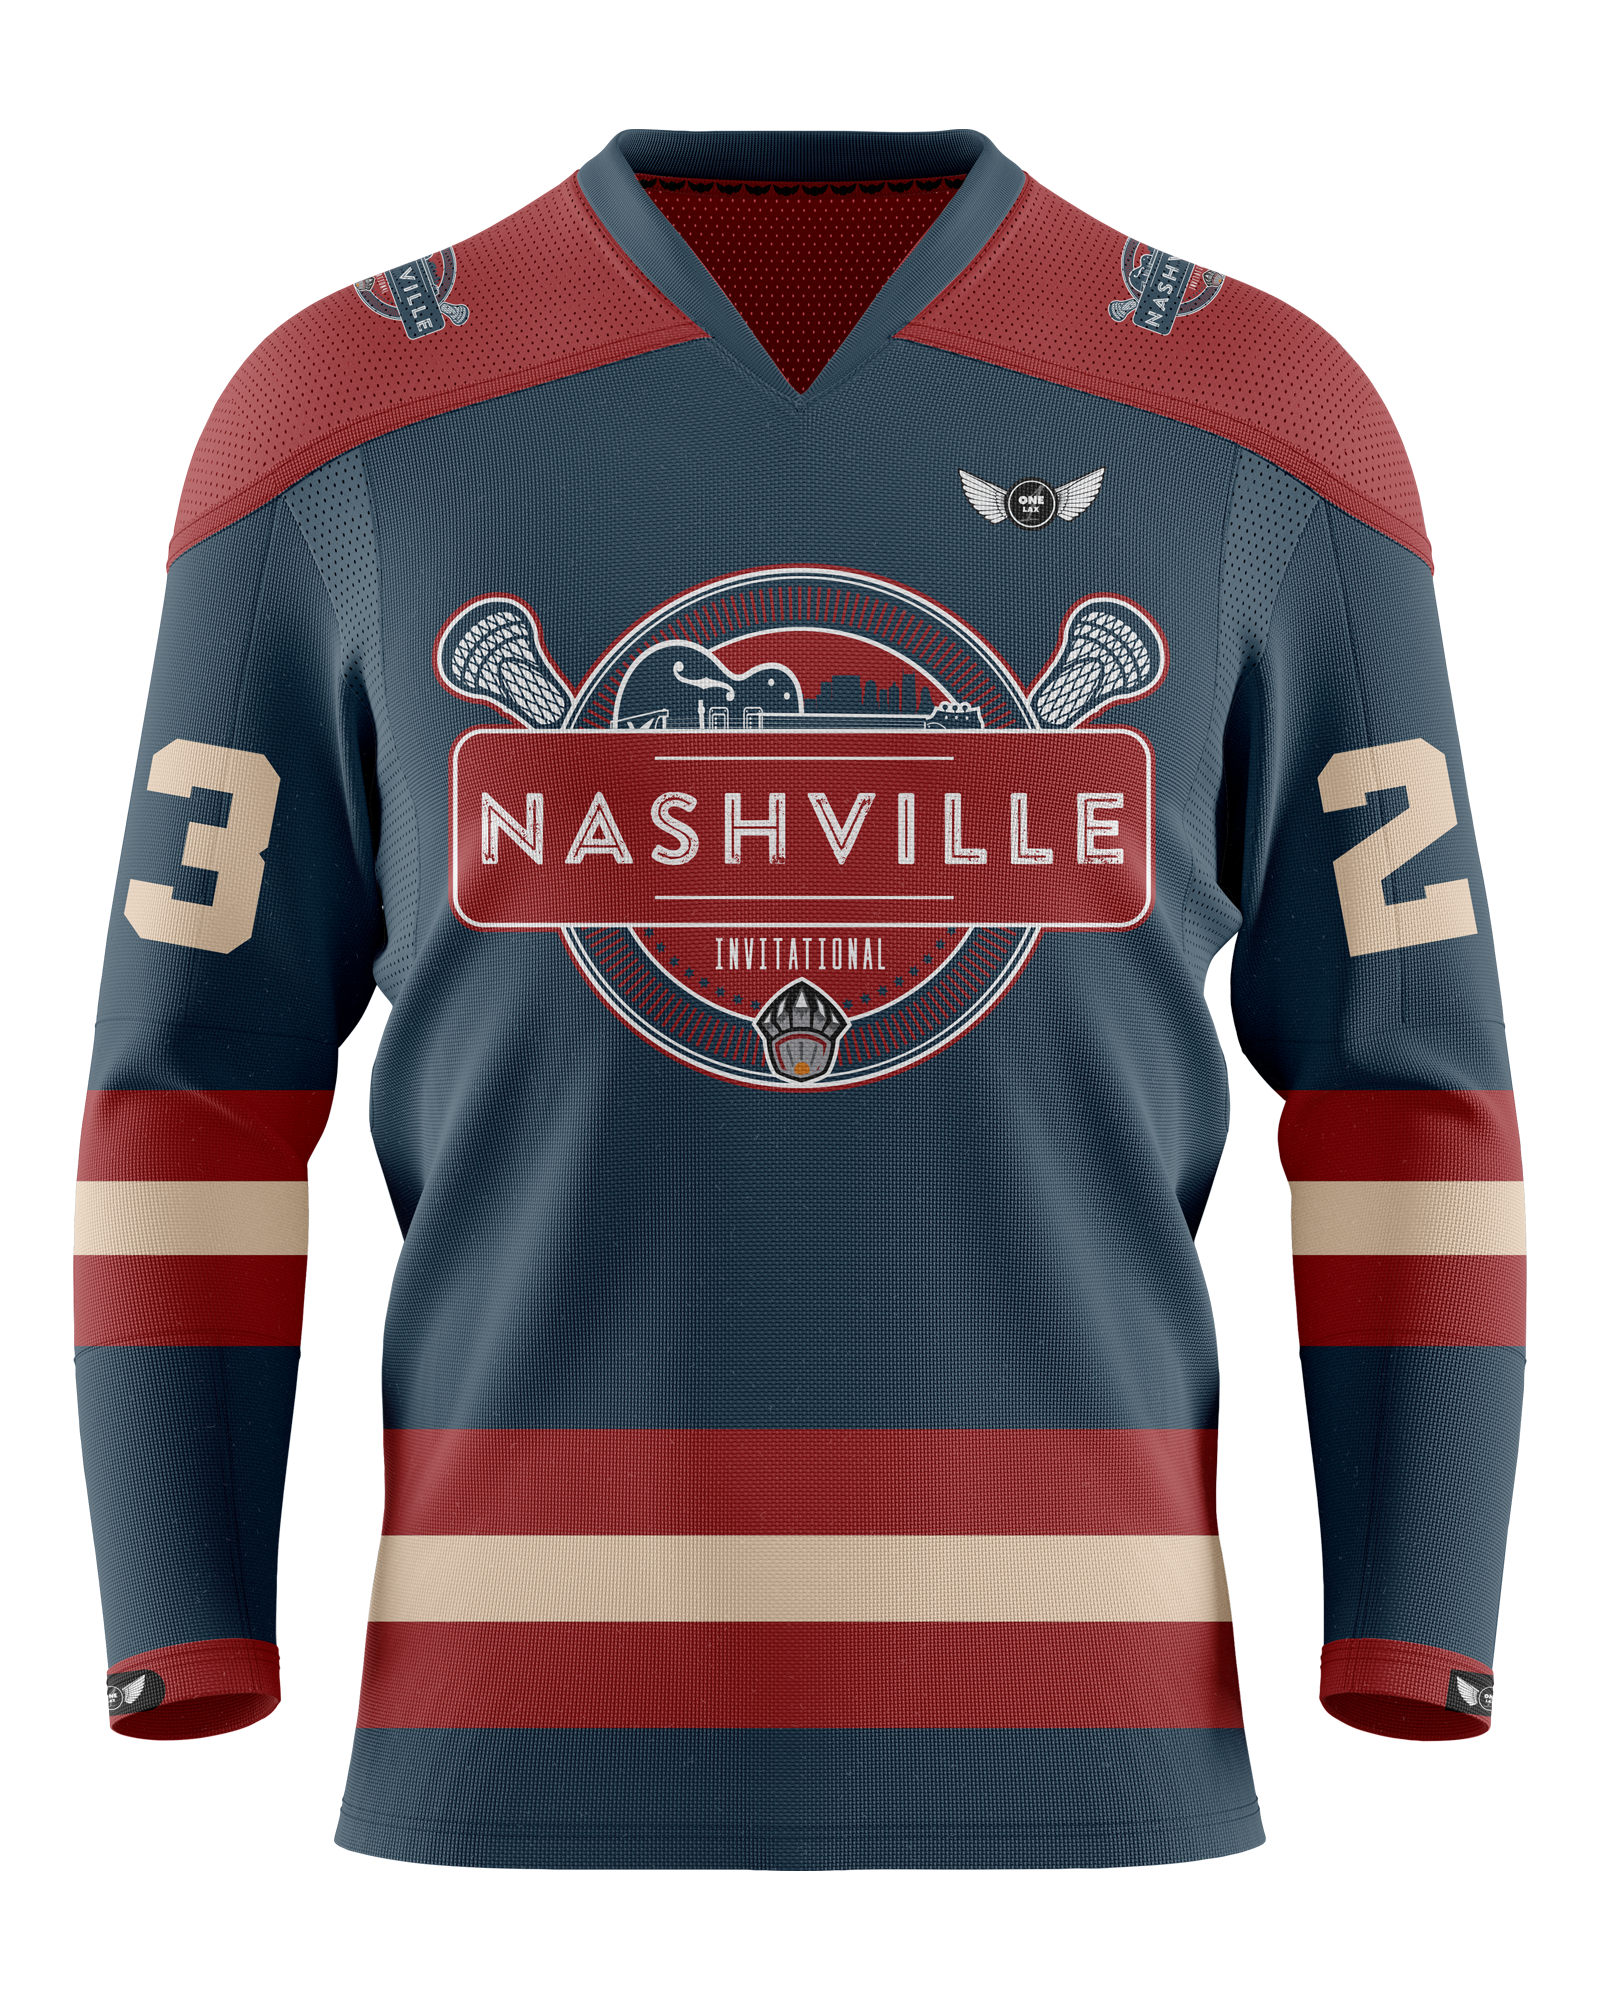 One Lax Nashville Box Lacrosse Jersey - One Lax